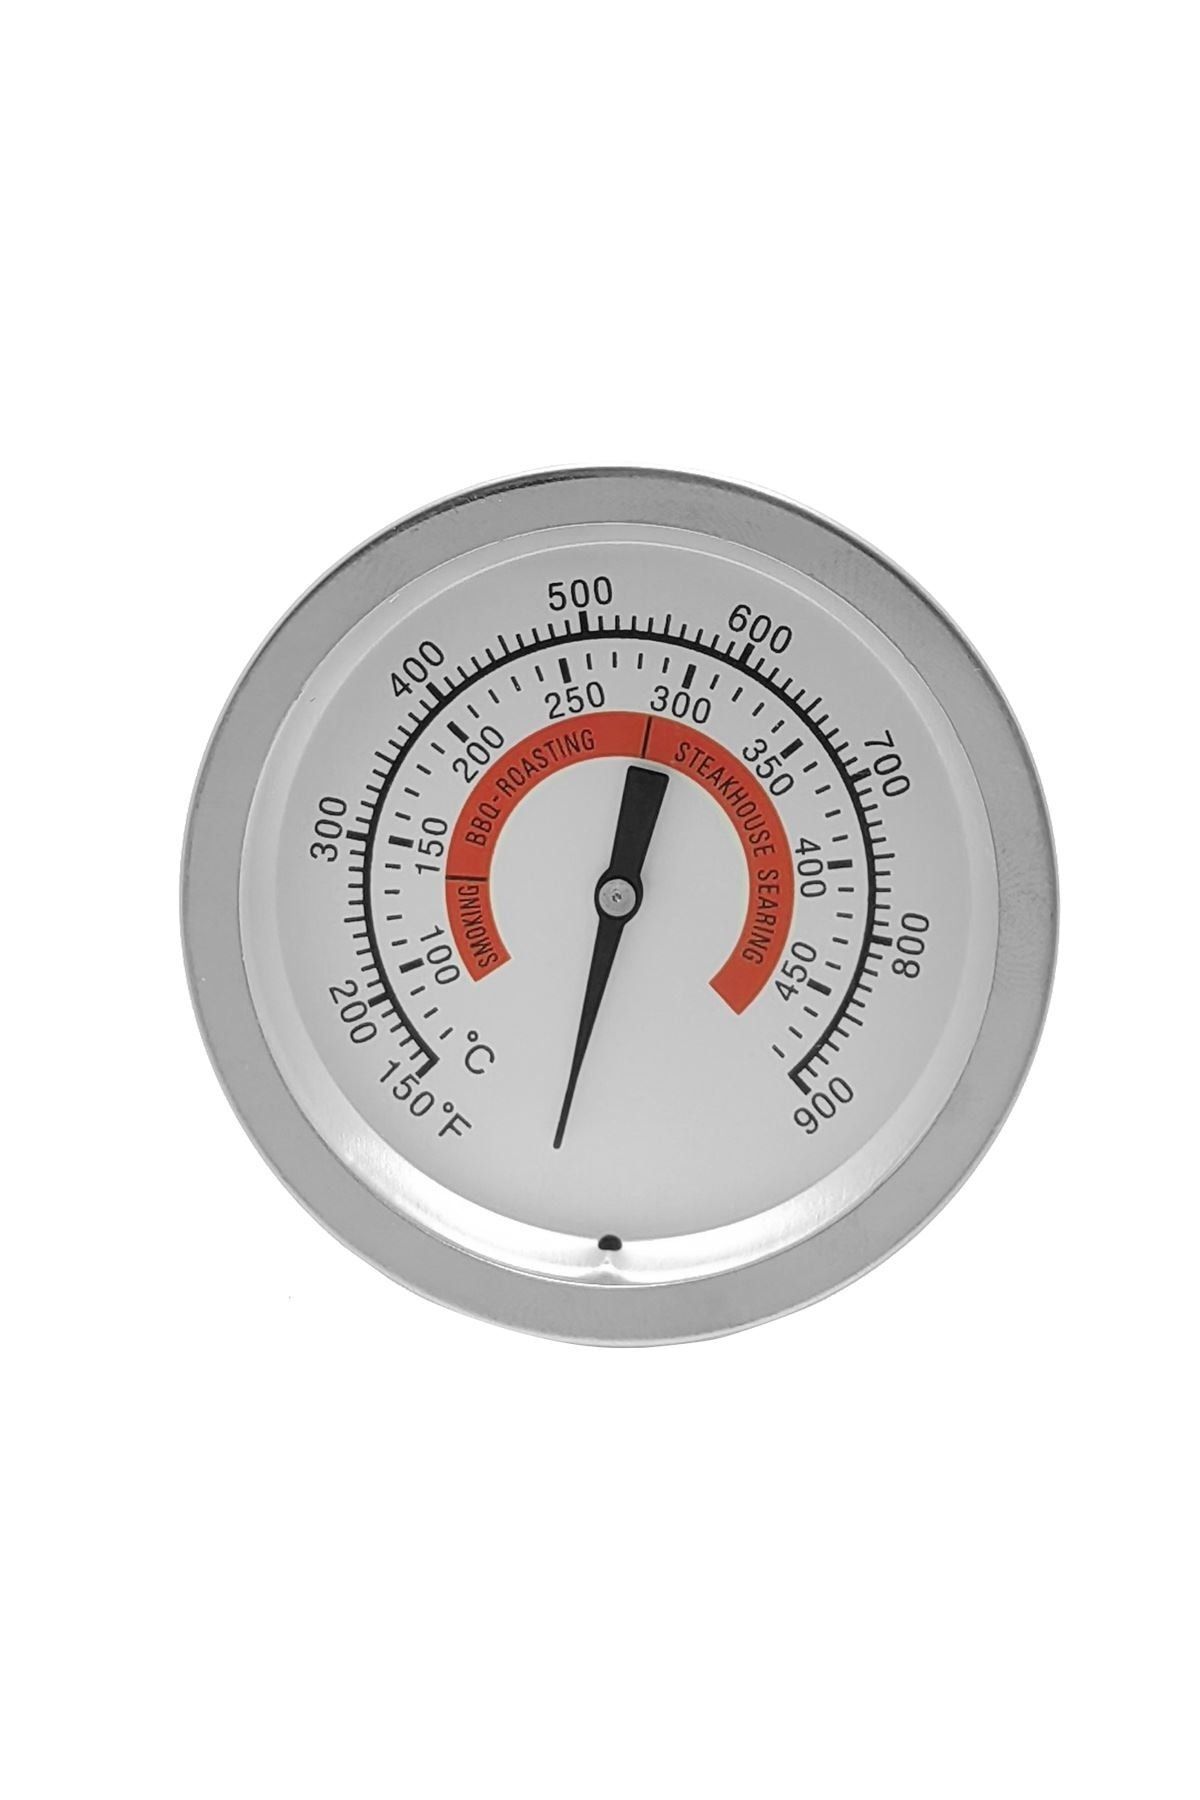 Chavin Barbekü Mangal Fırın Termometresi 100-450 Derece Thr364